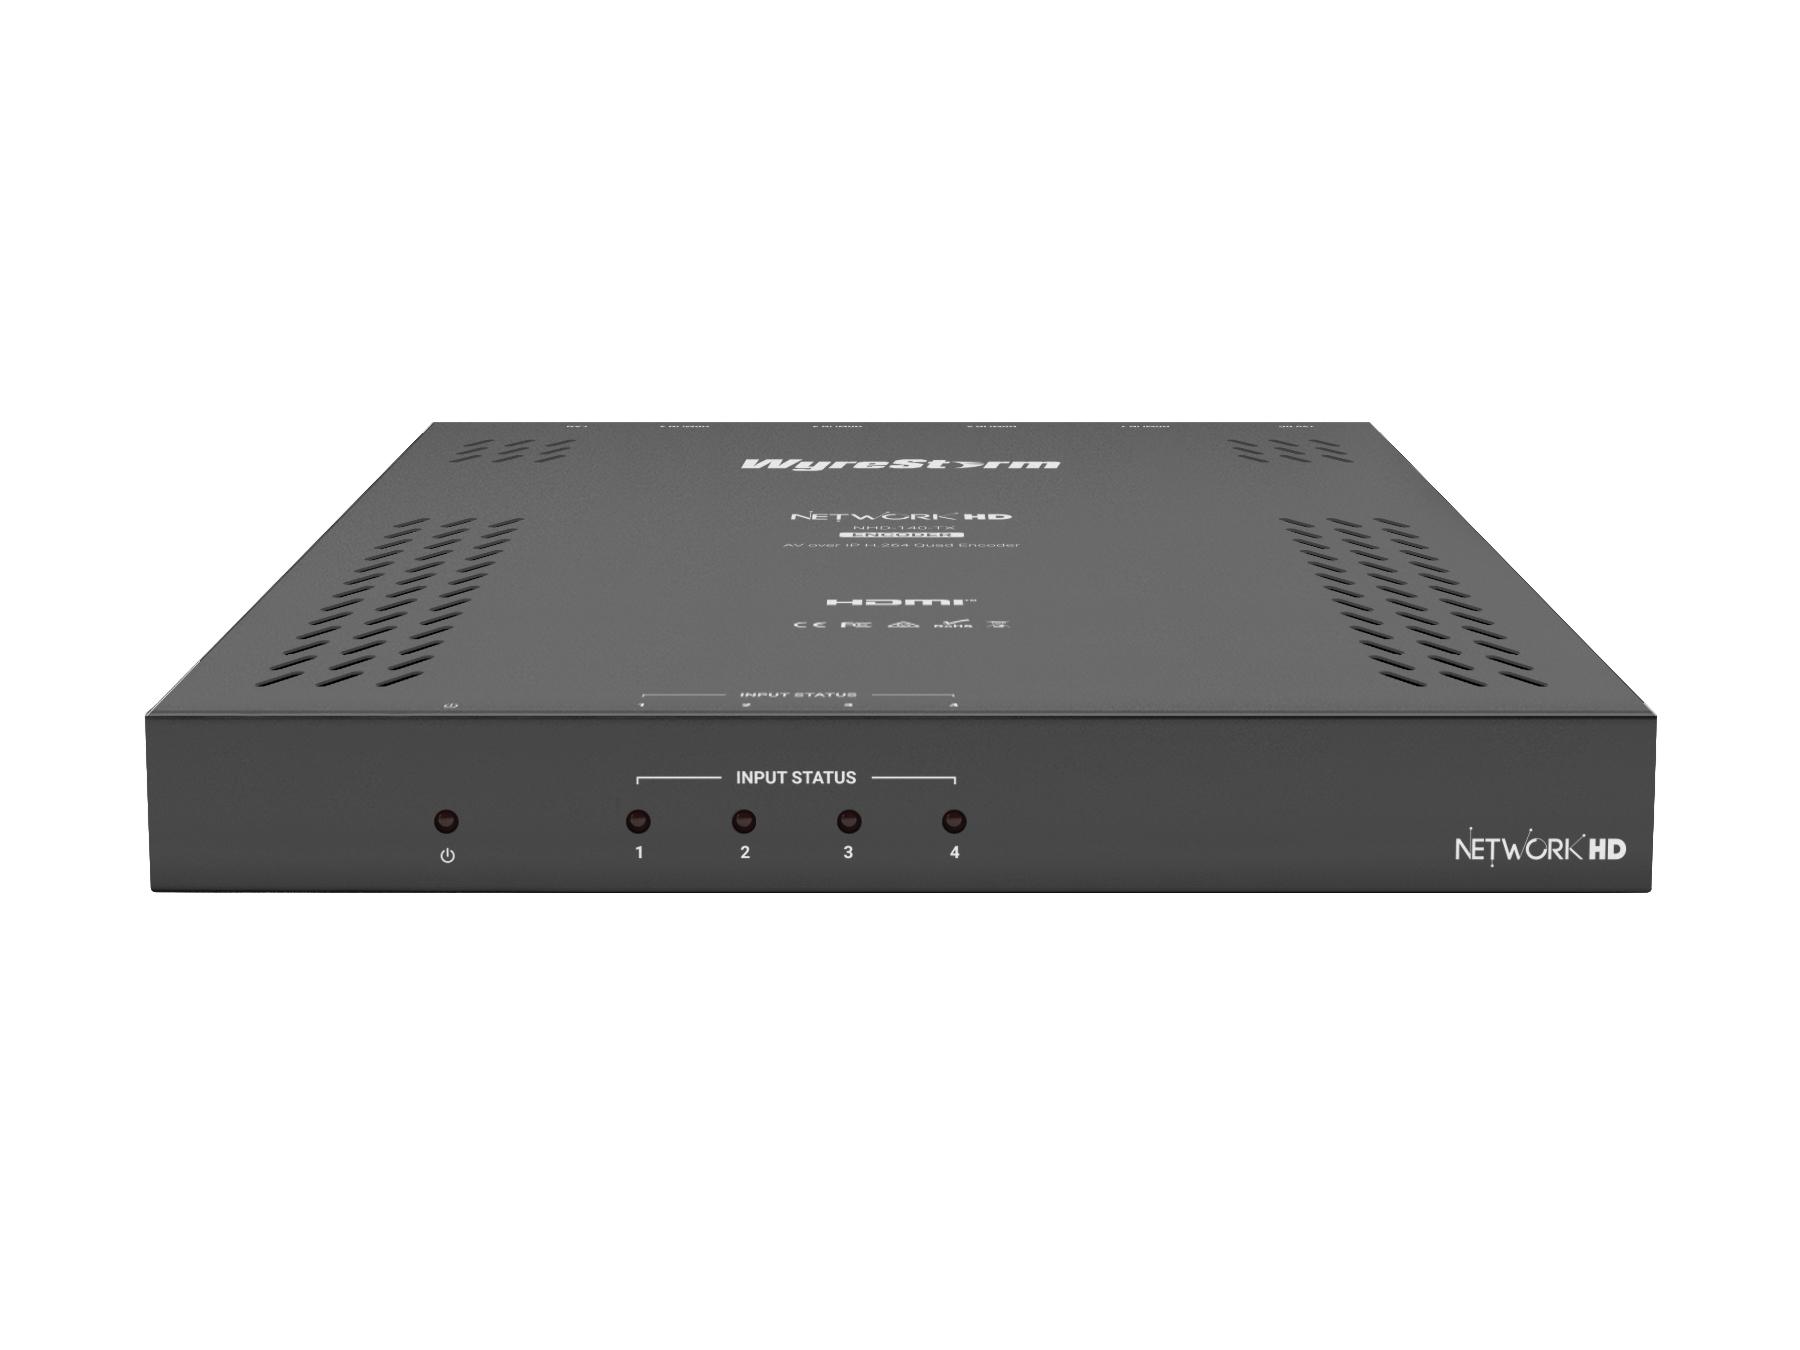 NetworkHD 600 series